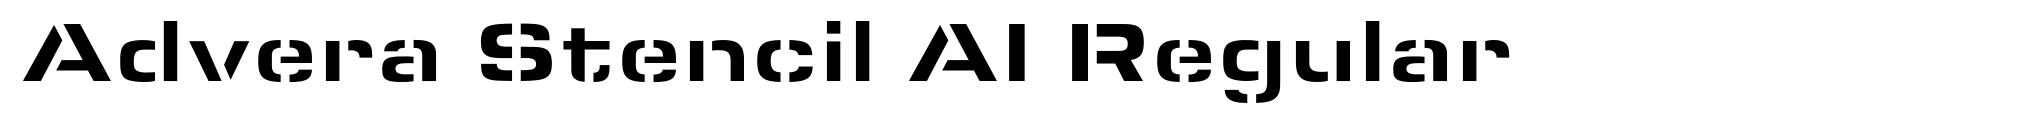 Advera Stencil AI Regular image